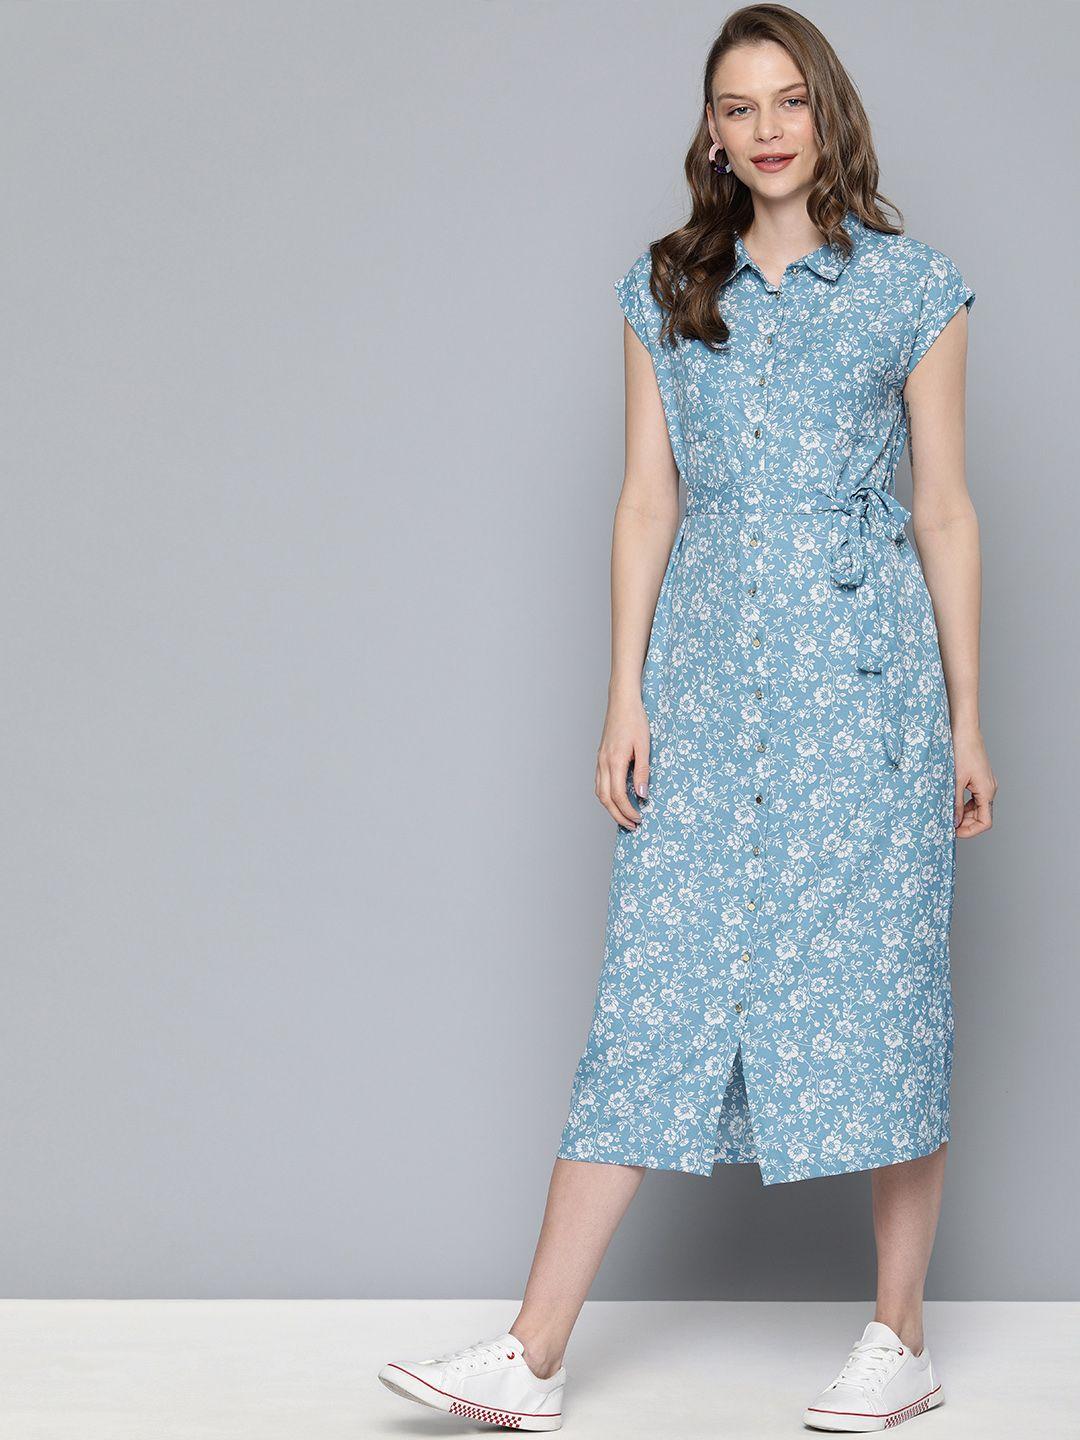 mast & harbour blue & white floral print shirt dress